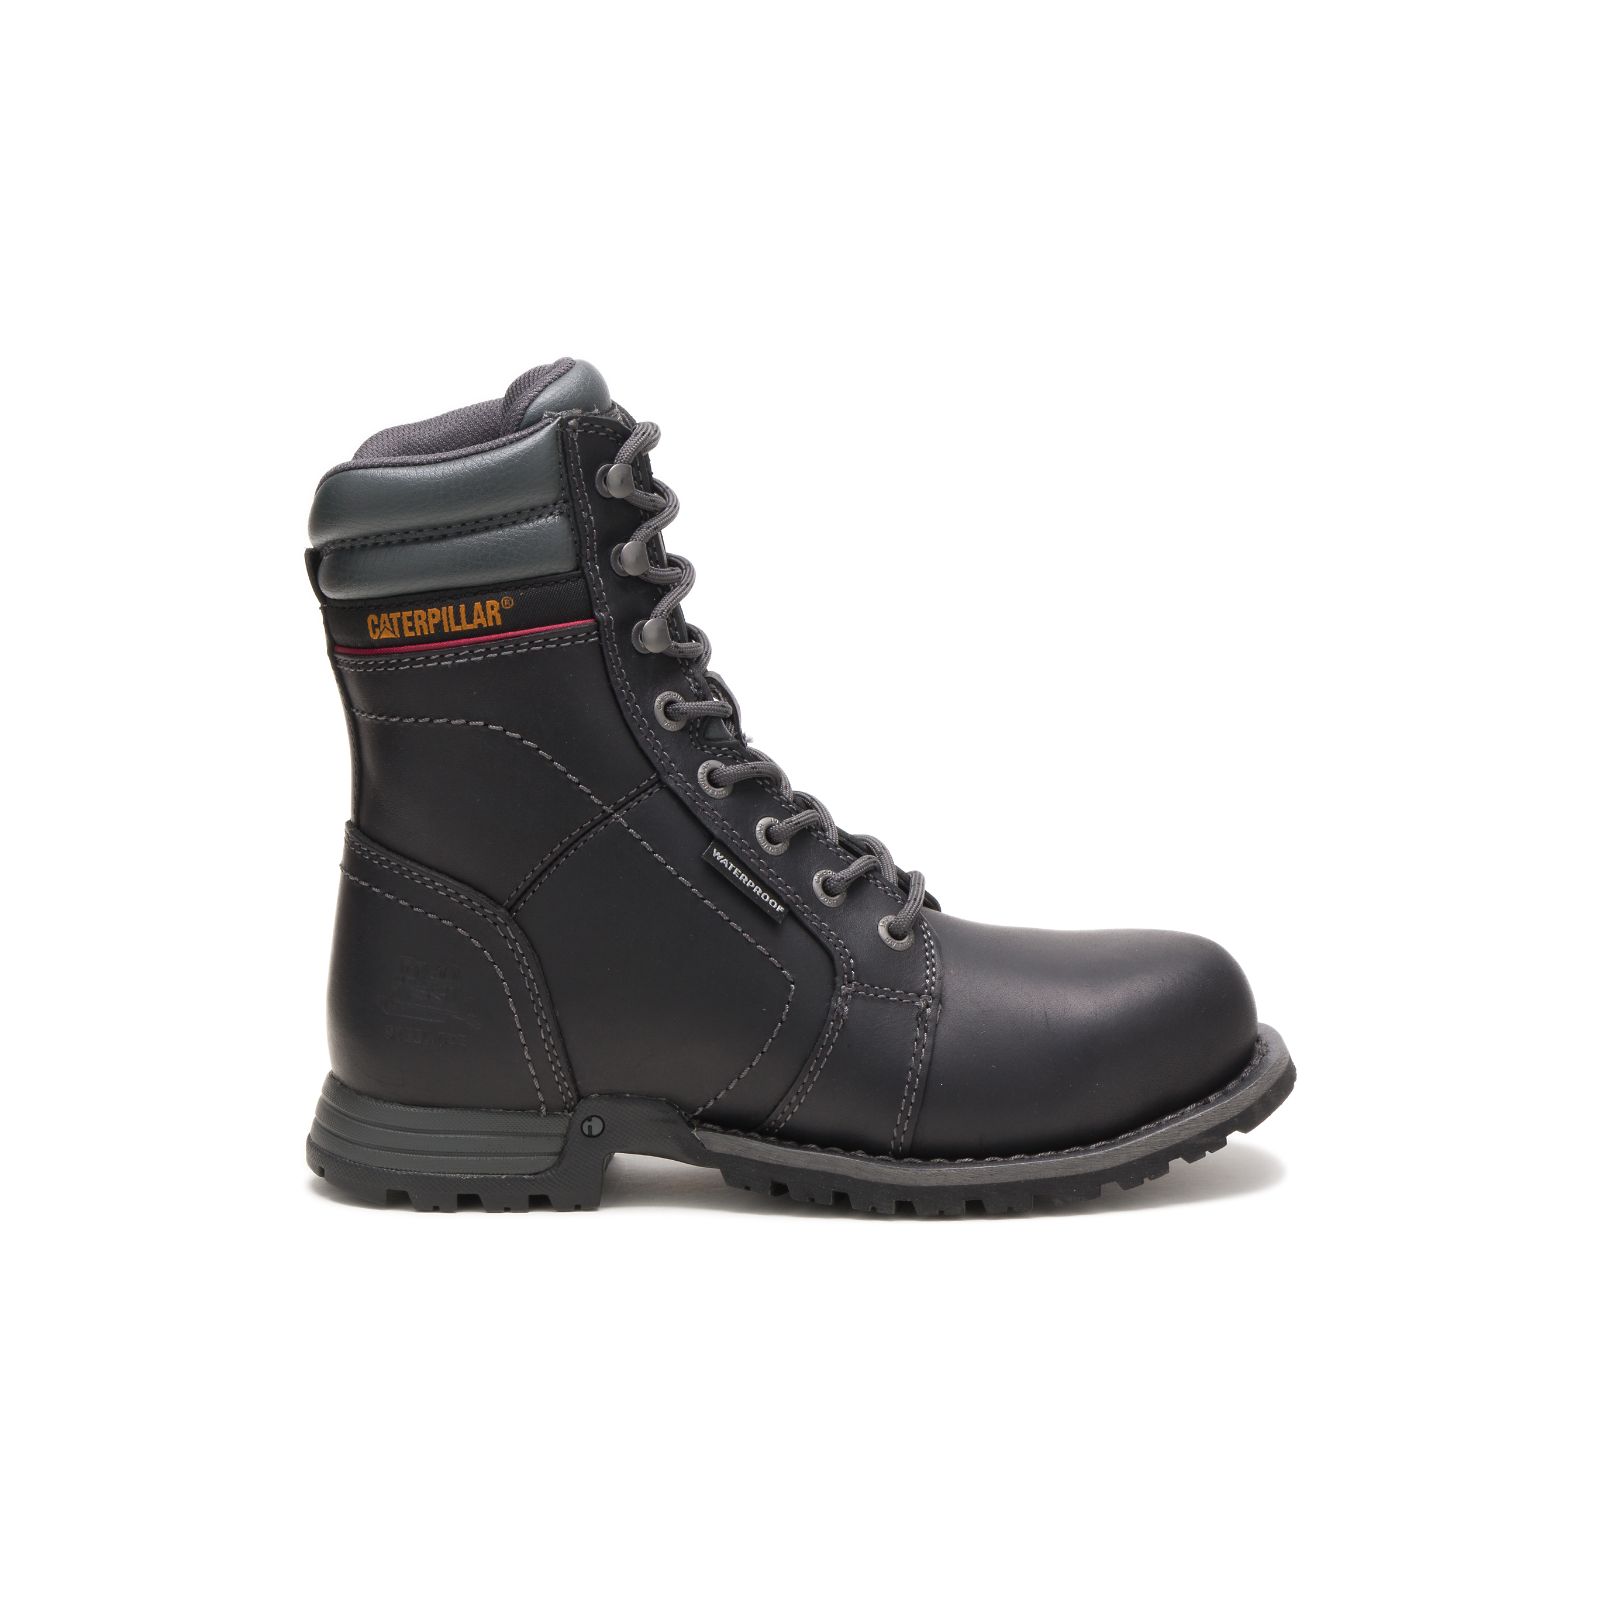 Caterpillar Work Boots UAE Online - Caterpillar Echo Waterproof Steel Toe Womens - Black YZQCRA451